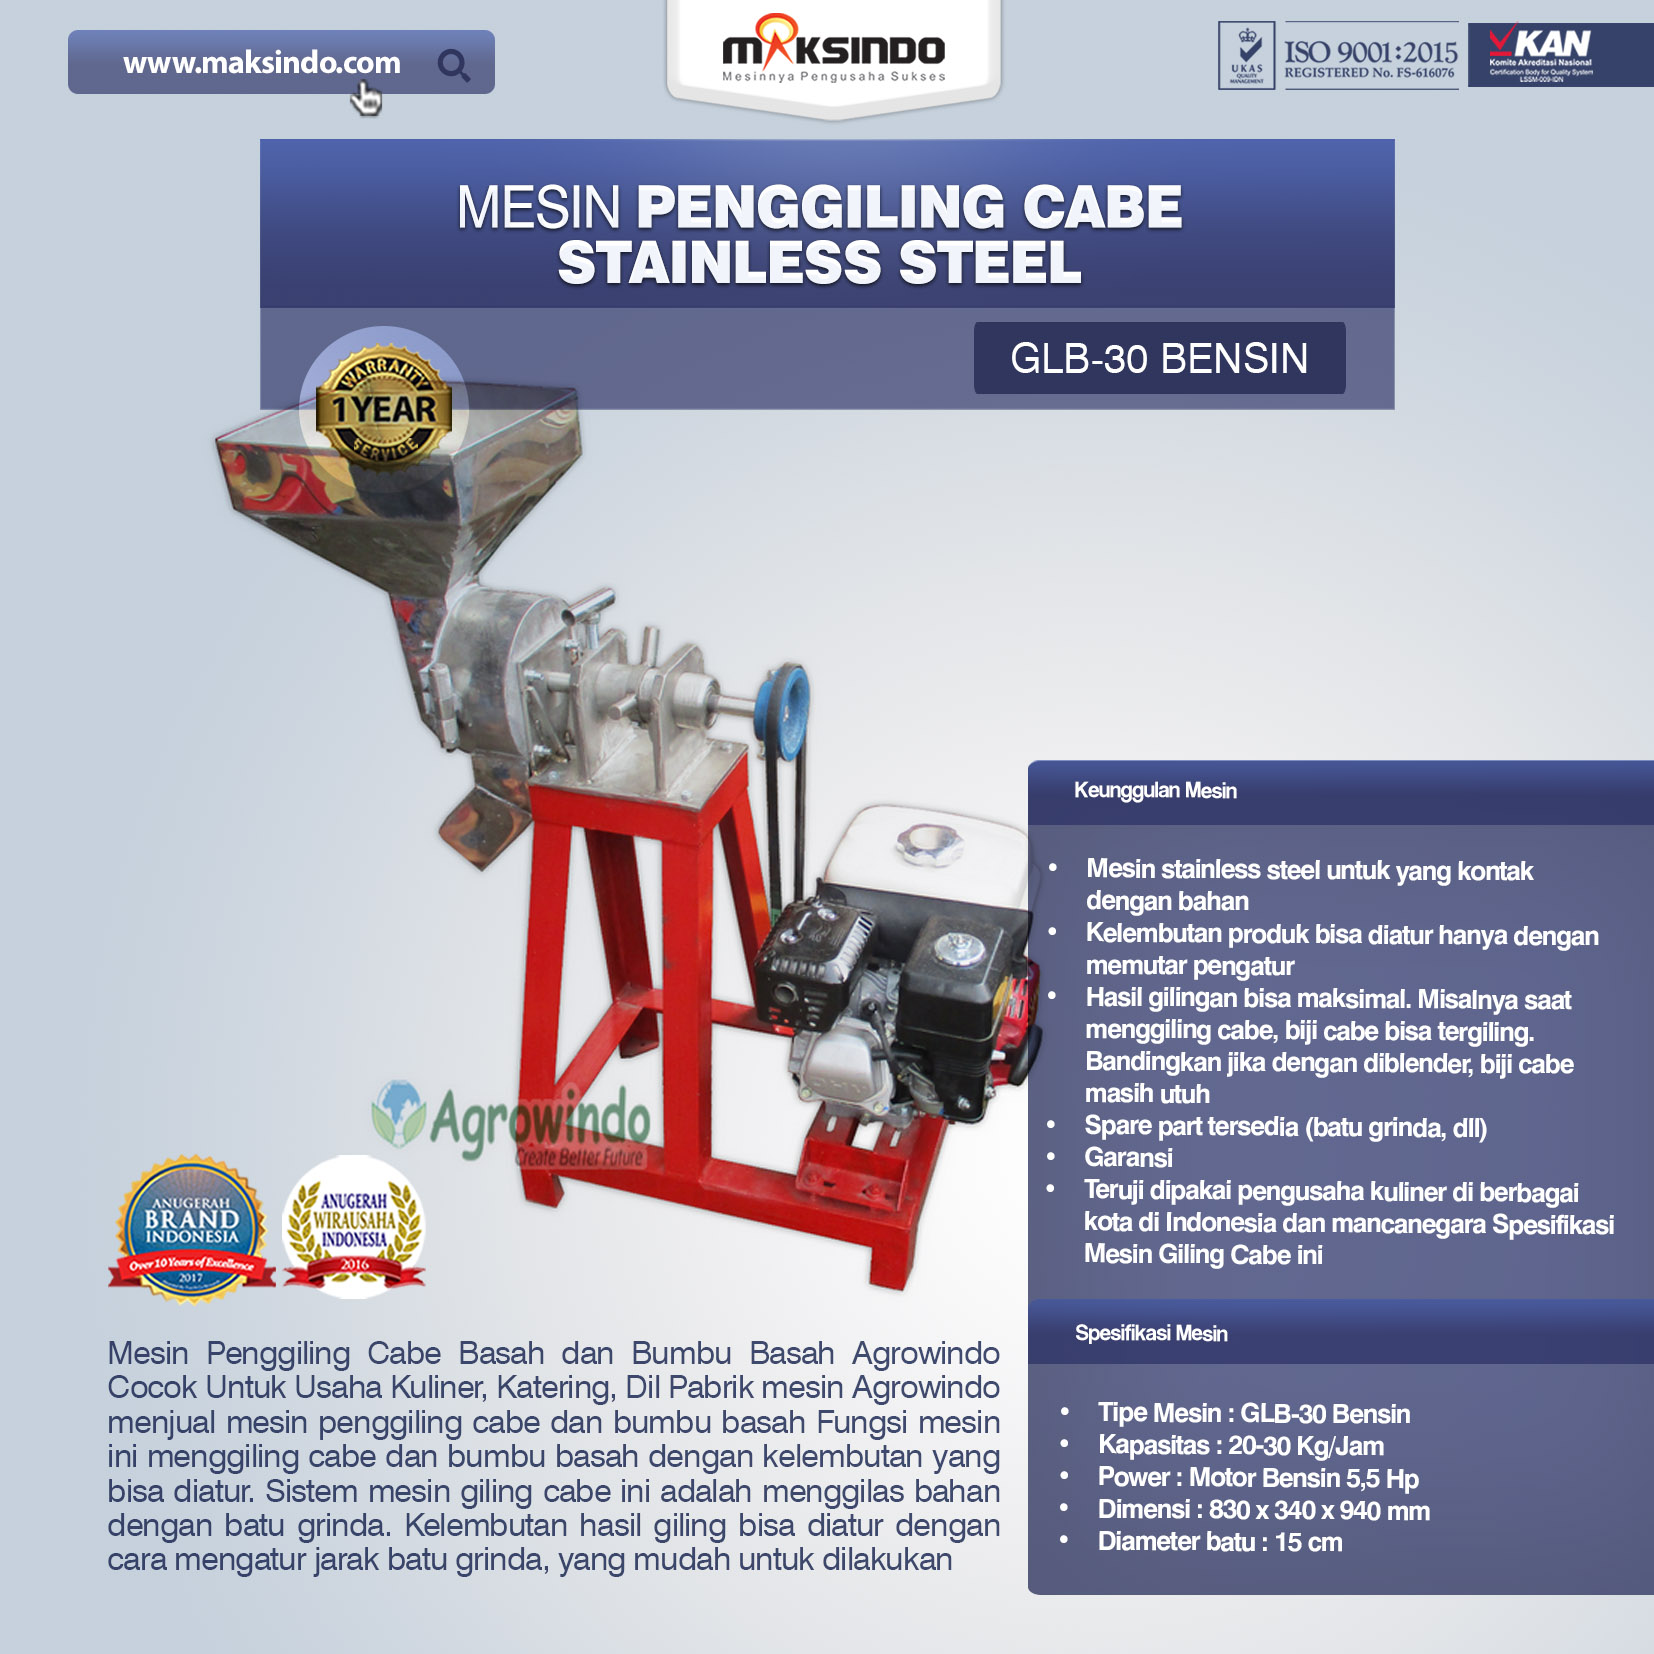 Mesin Penggiling Cabe Stainless Steel GLB-30 Bensin